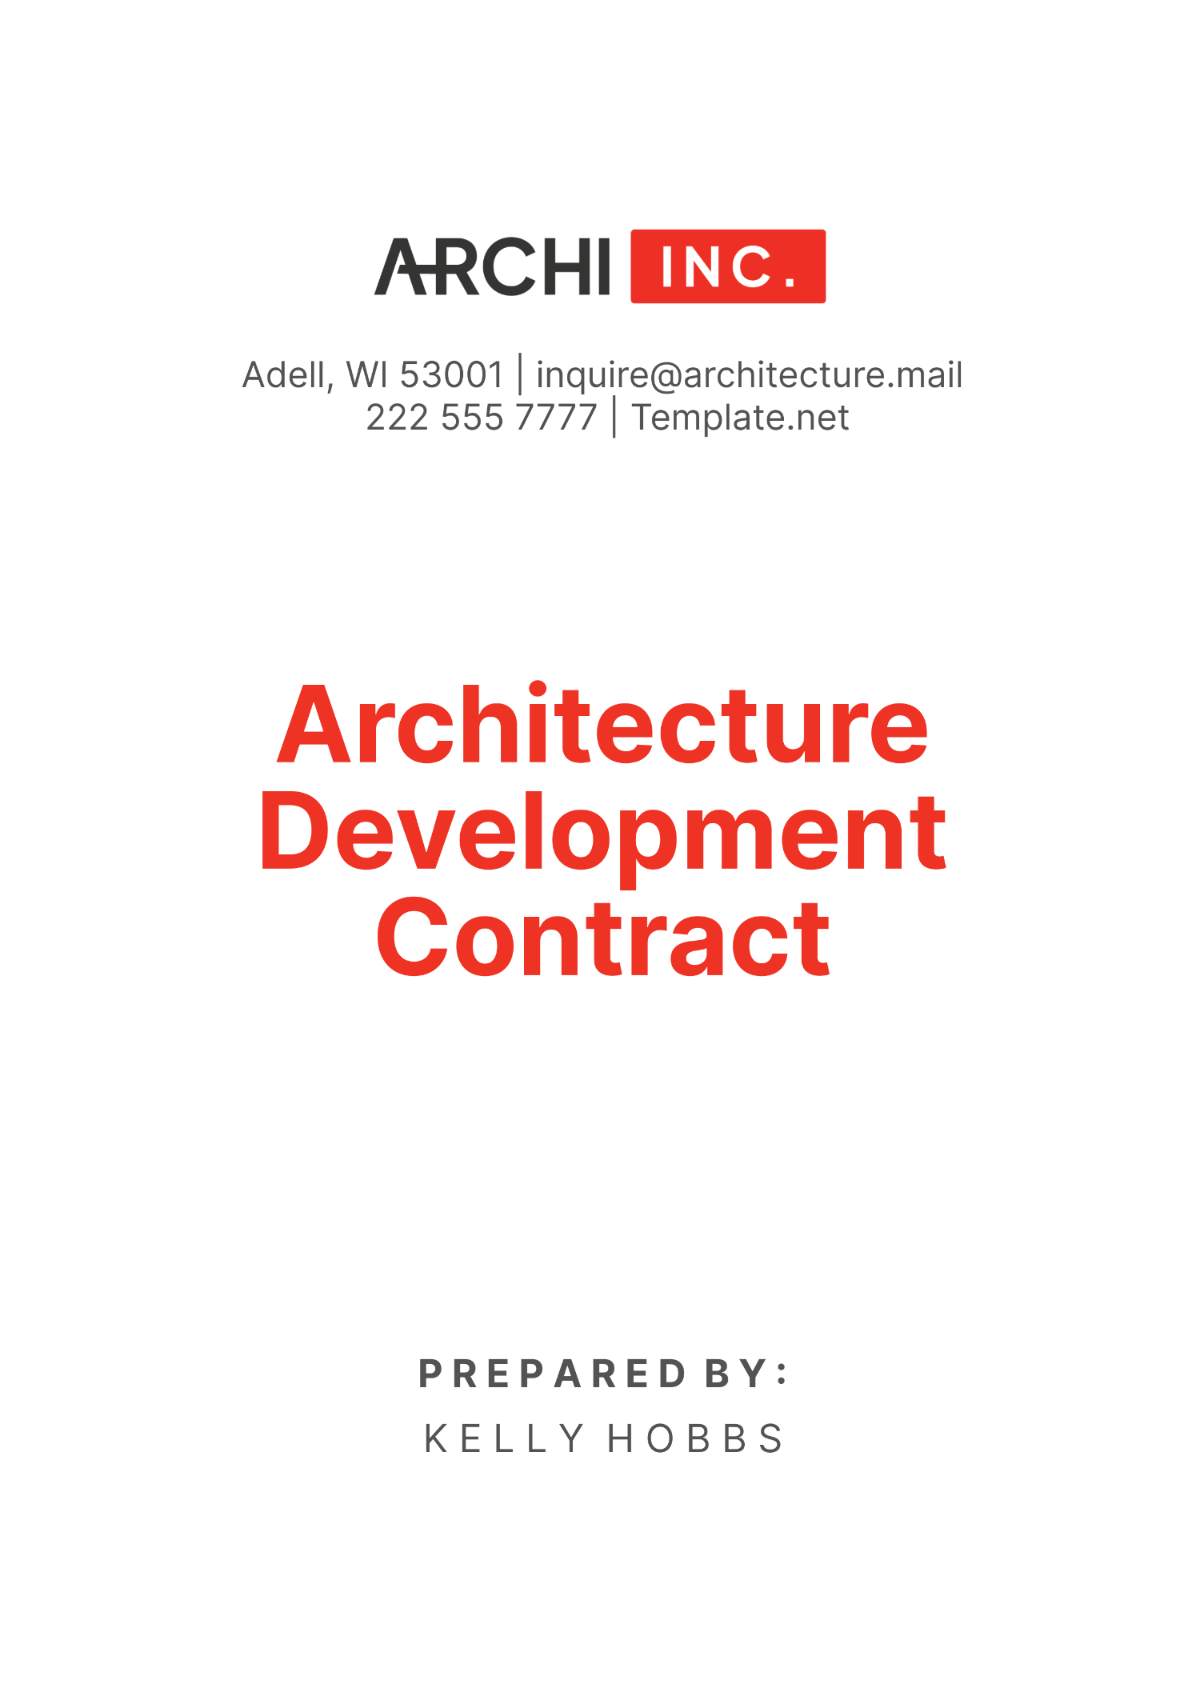 Free Architecture Development Contract Template